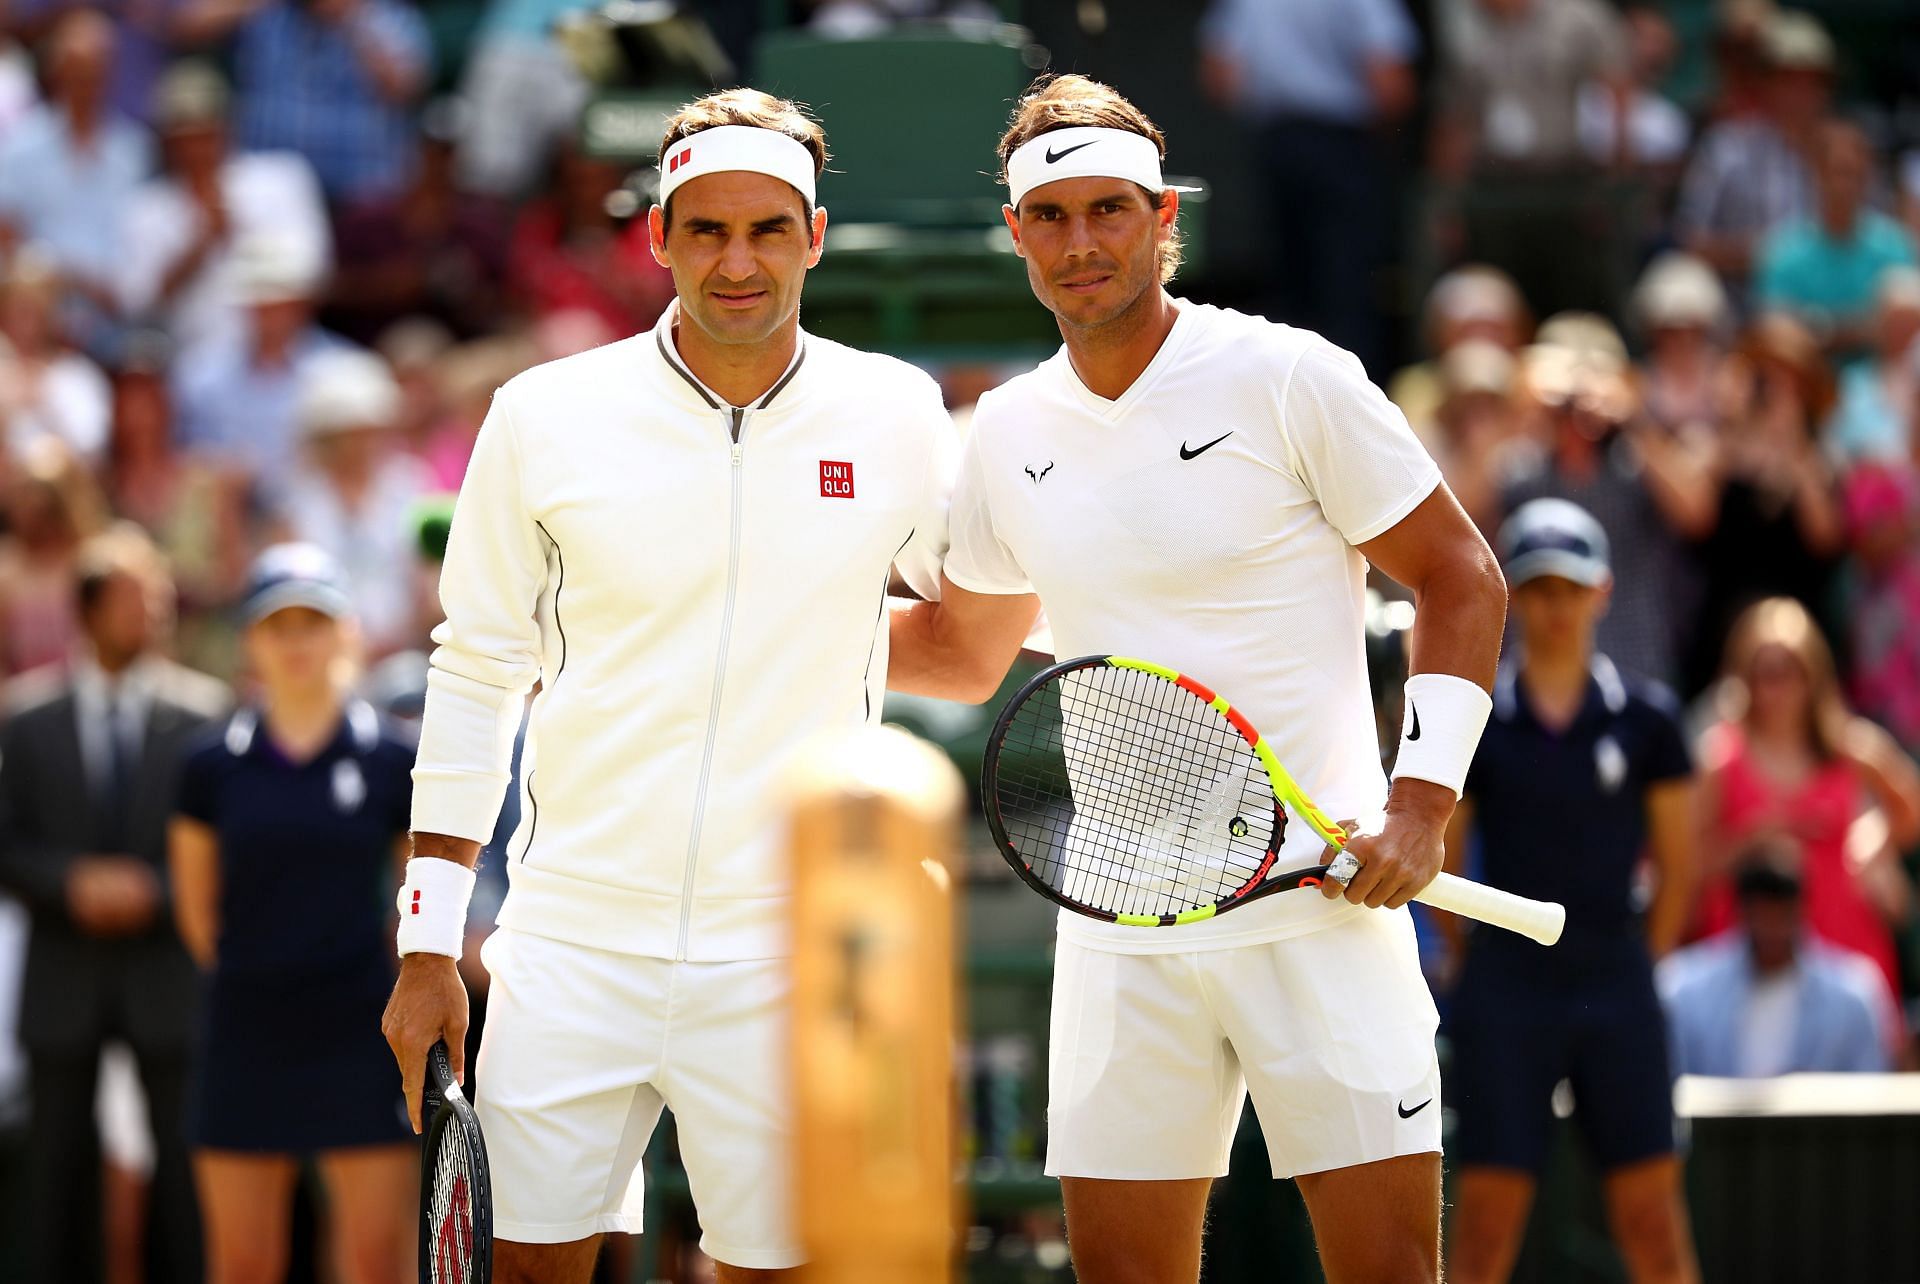 Roger Federer won their last match at the 2019 Wimbledon